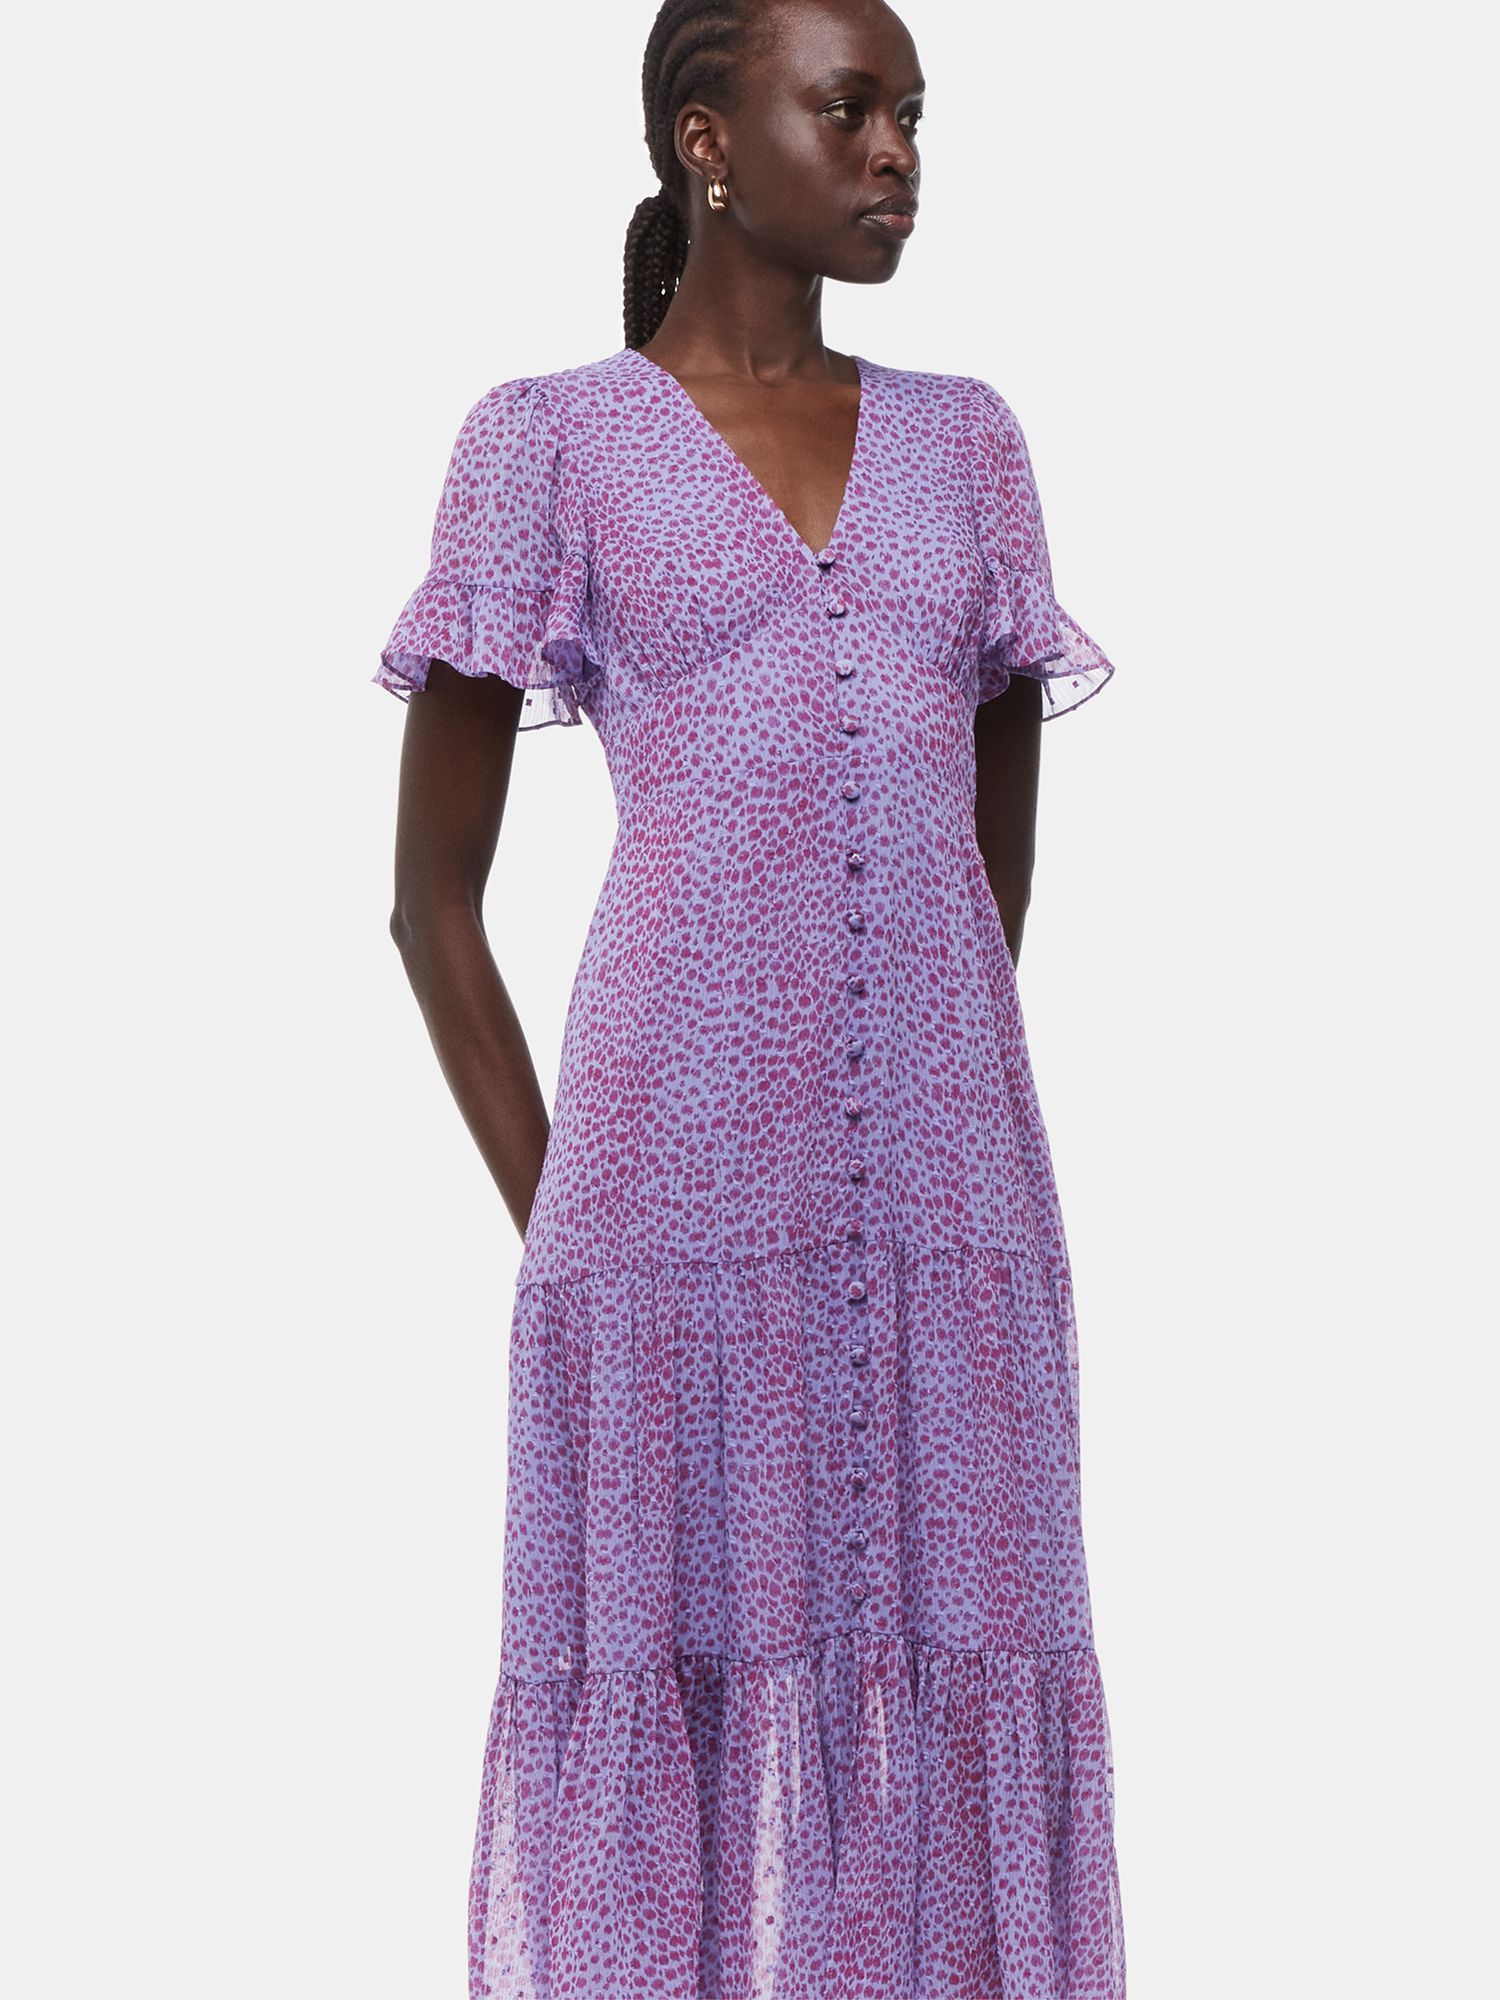 Whistles Sketched Cheetah Print Midi Dress, Purple/Multi, 6